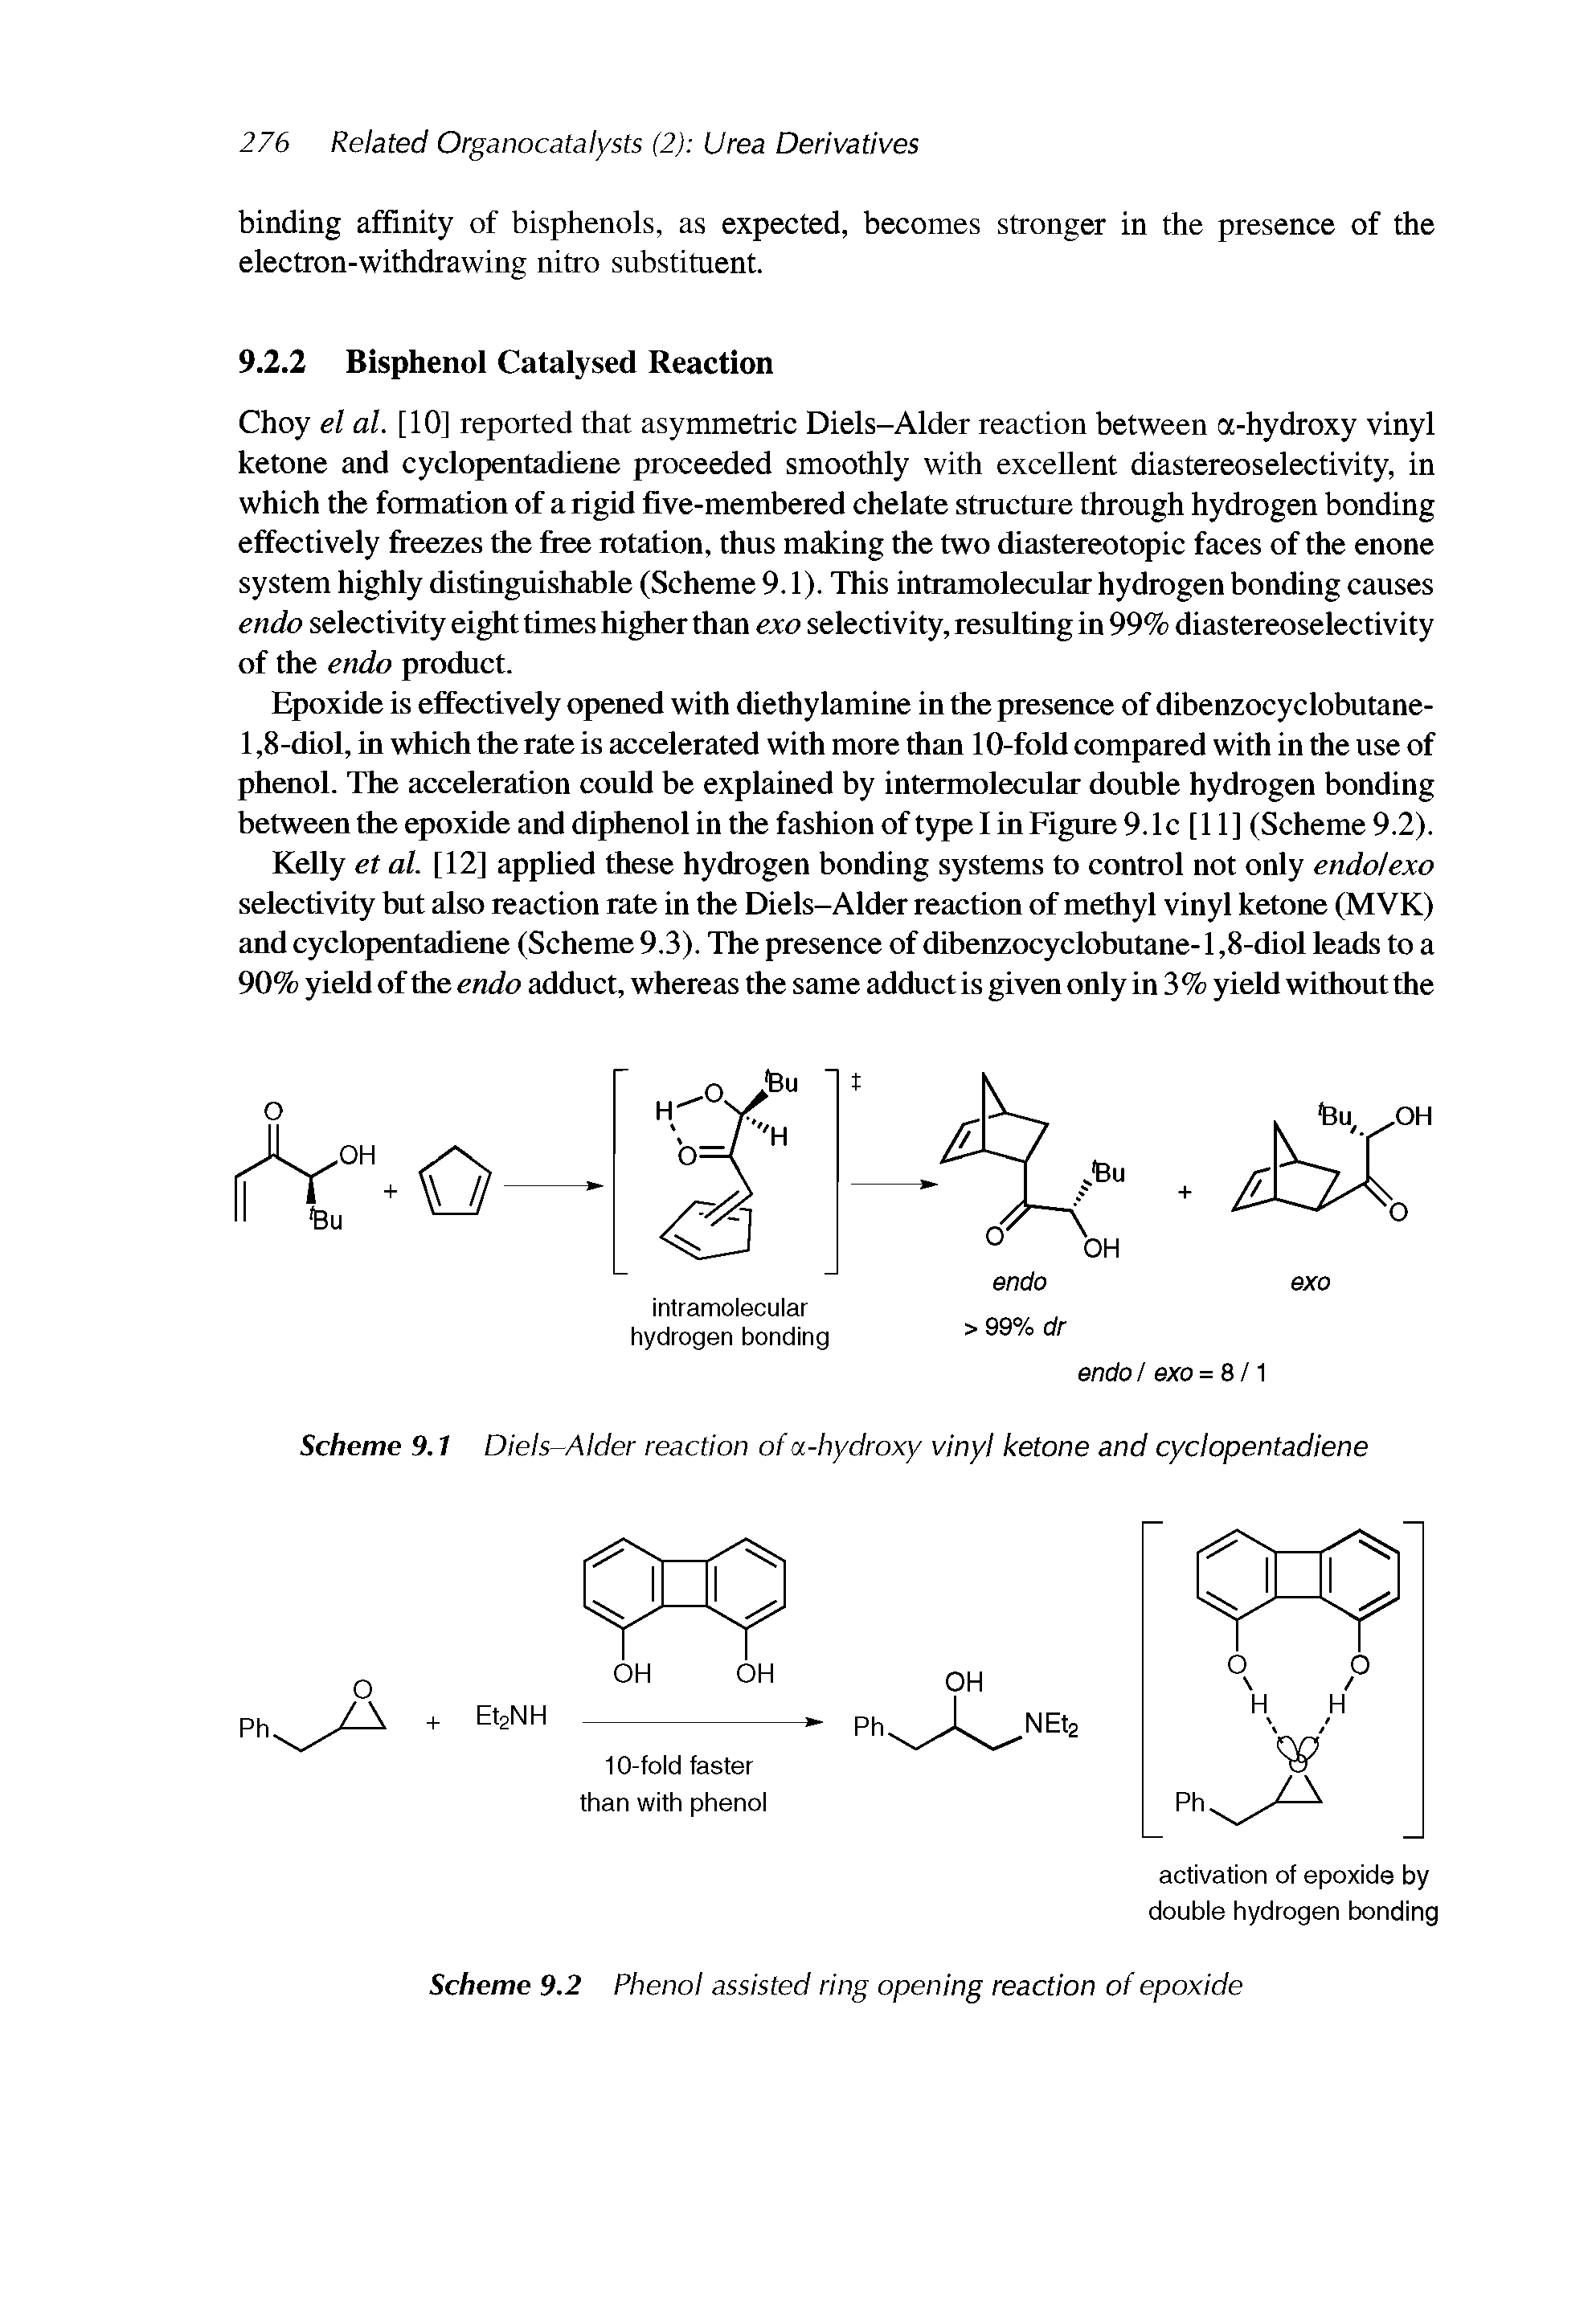 Scheme 9.1 Diels-Alder reaction of a-hydroxy vinyl ketone and cyclopentadiene...